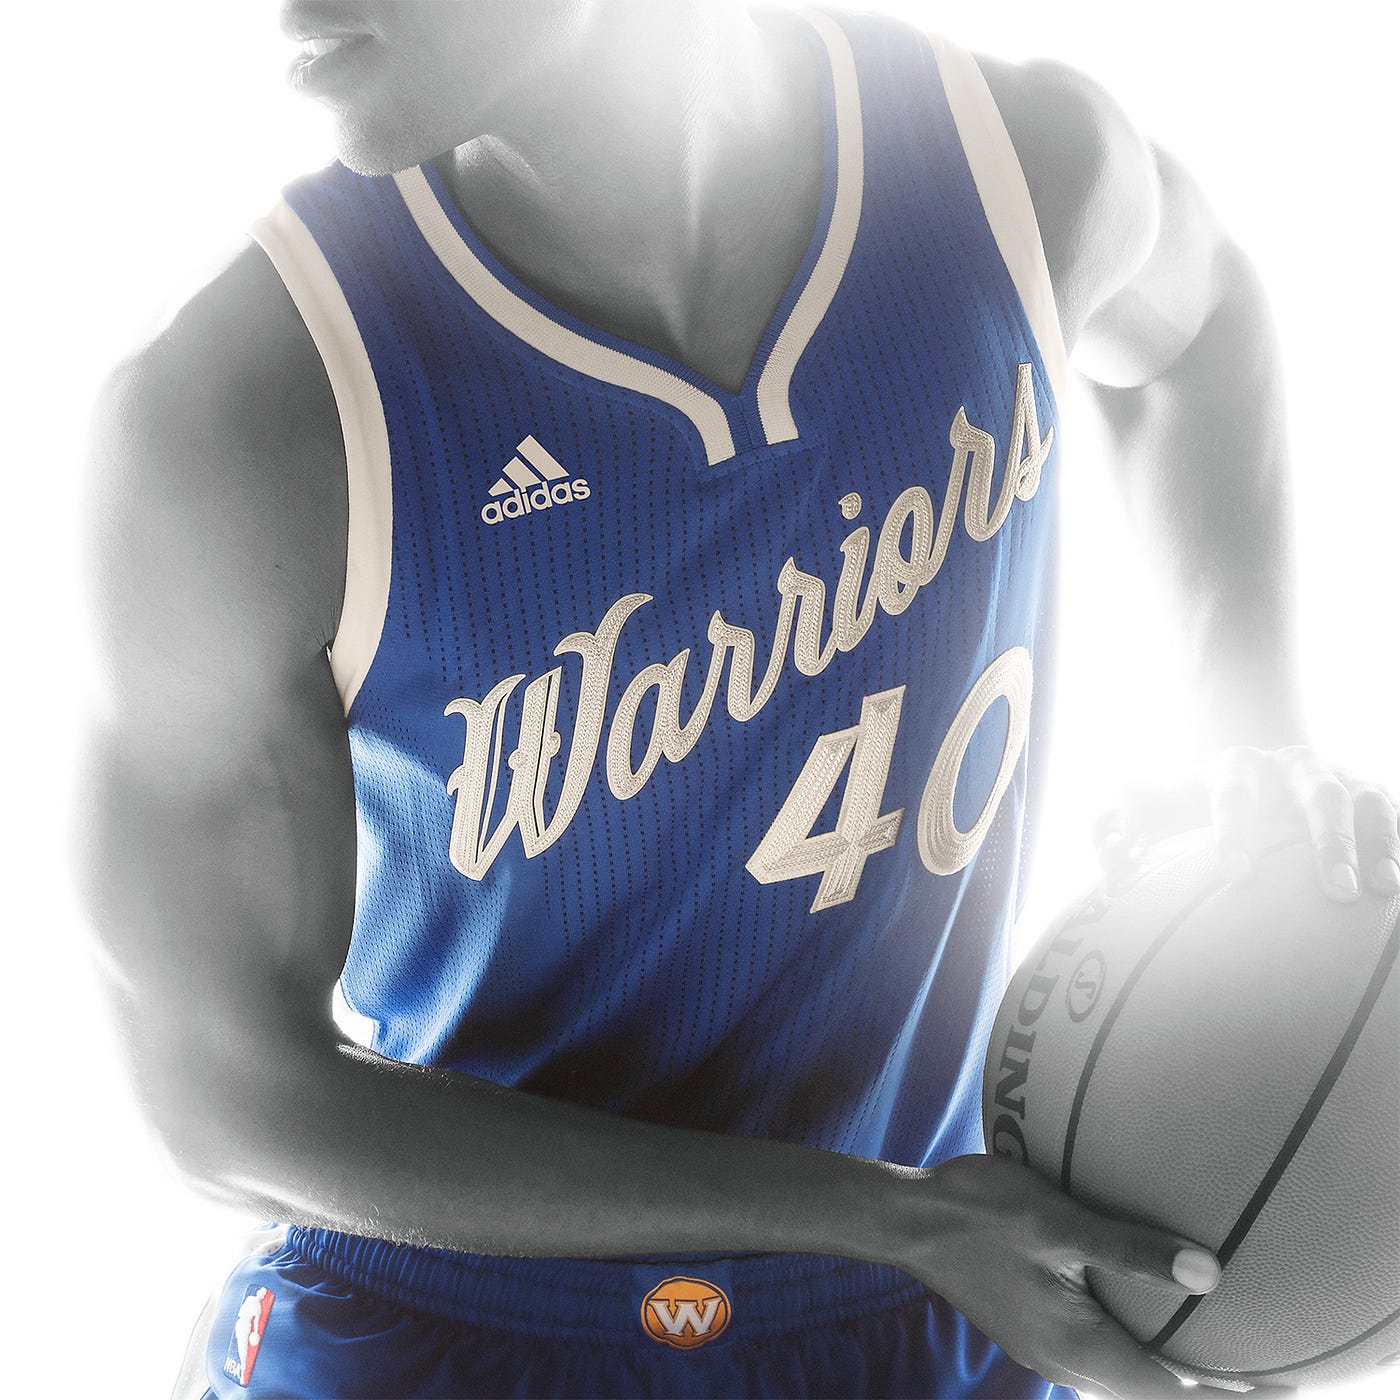 adidas, Stance and the NBA Unveil Uniforms for 2015 NBA Christmas